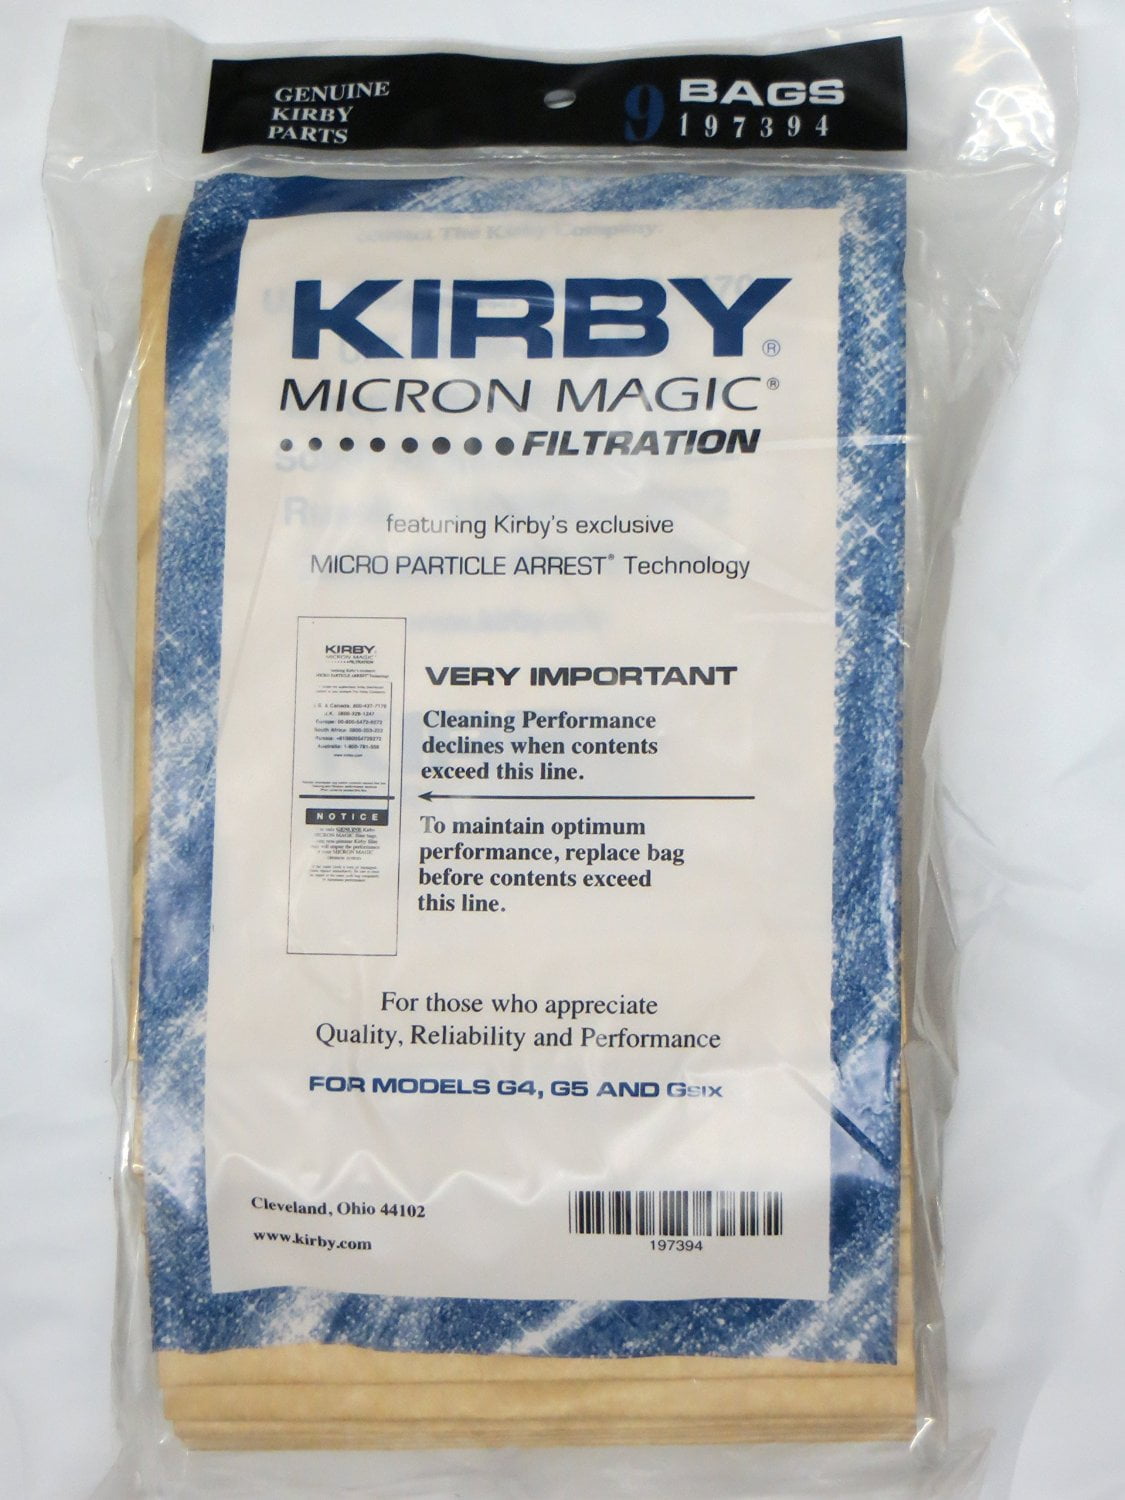 Kirby Micron Magic Vacuum Bags Sentria Ultimate Diamond G6 G5 G4 G3 197394 9pack 